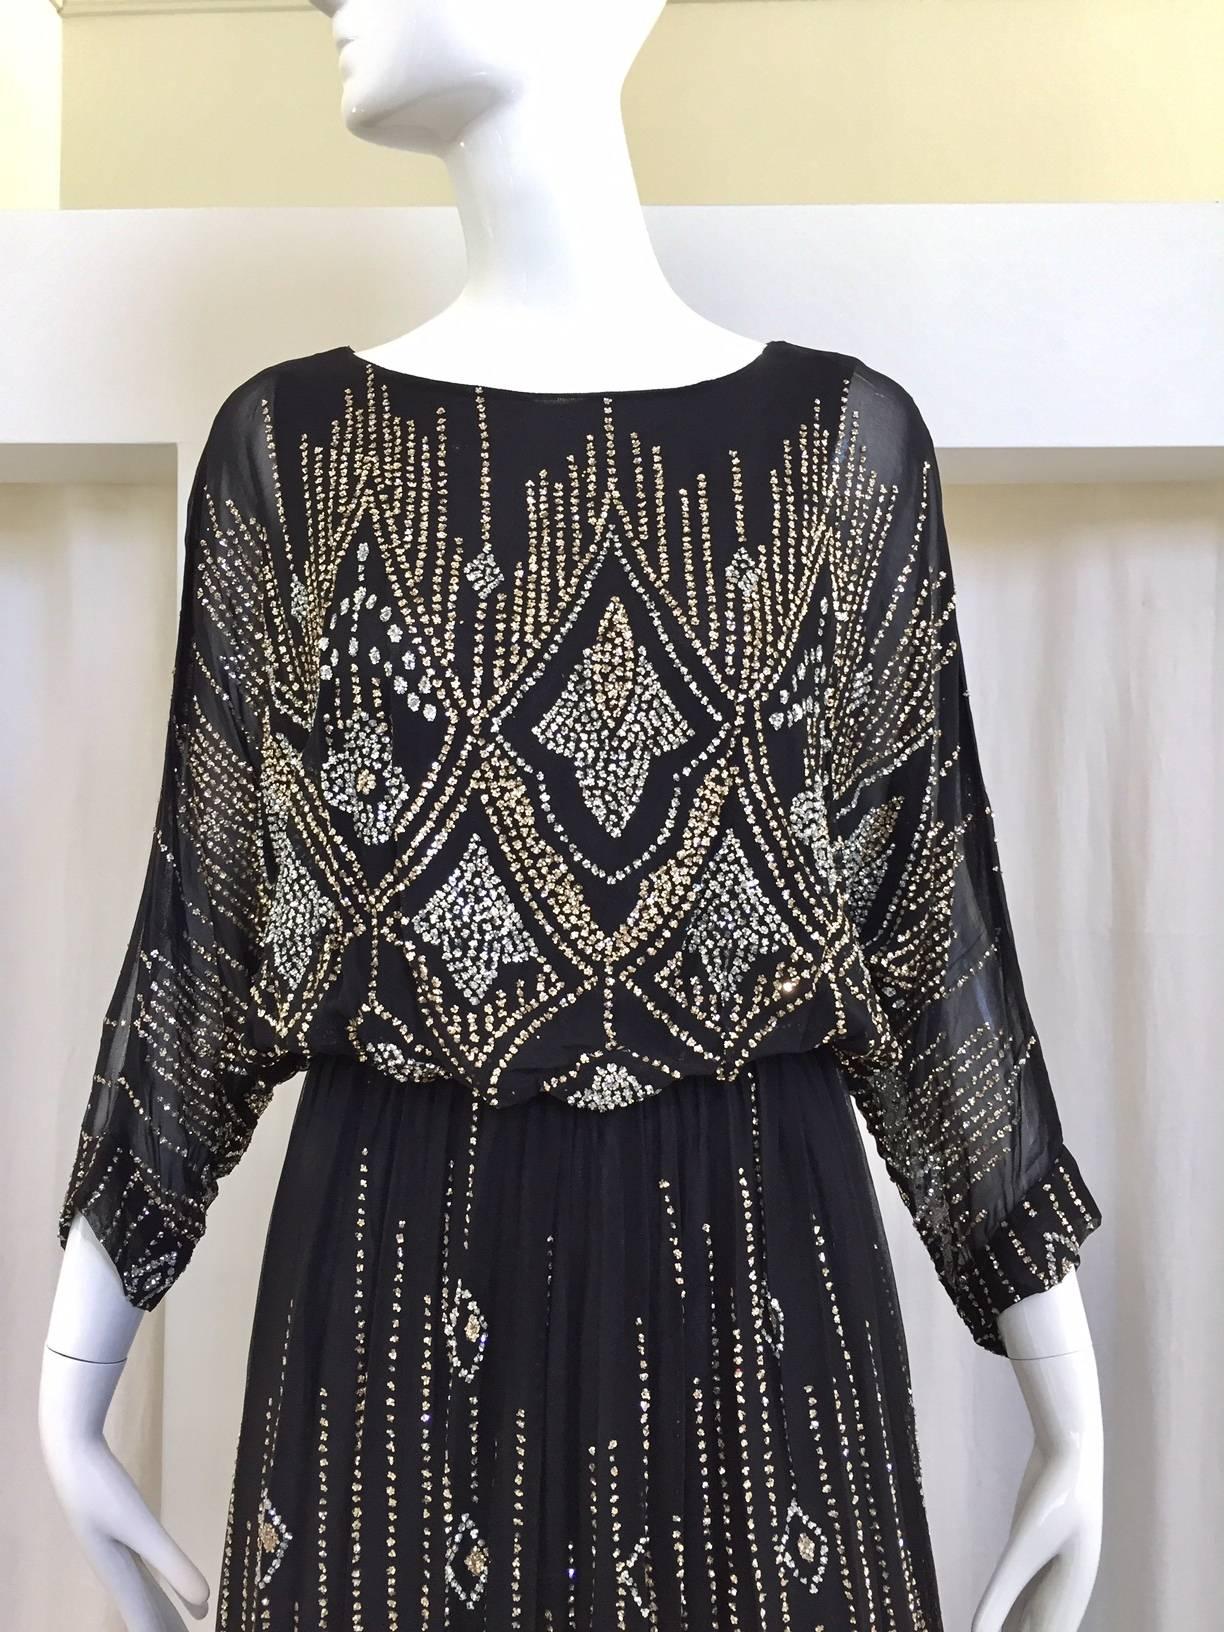 1970s Saks Fifth ave black silk metallic art deco print glitter dress. slip on dress ( no zipper)   Fit size 2/4/6 Medium
Shoulder : 16